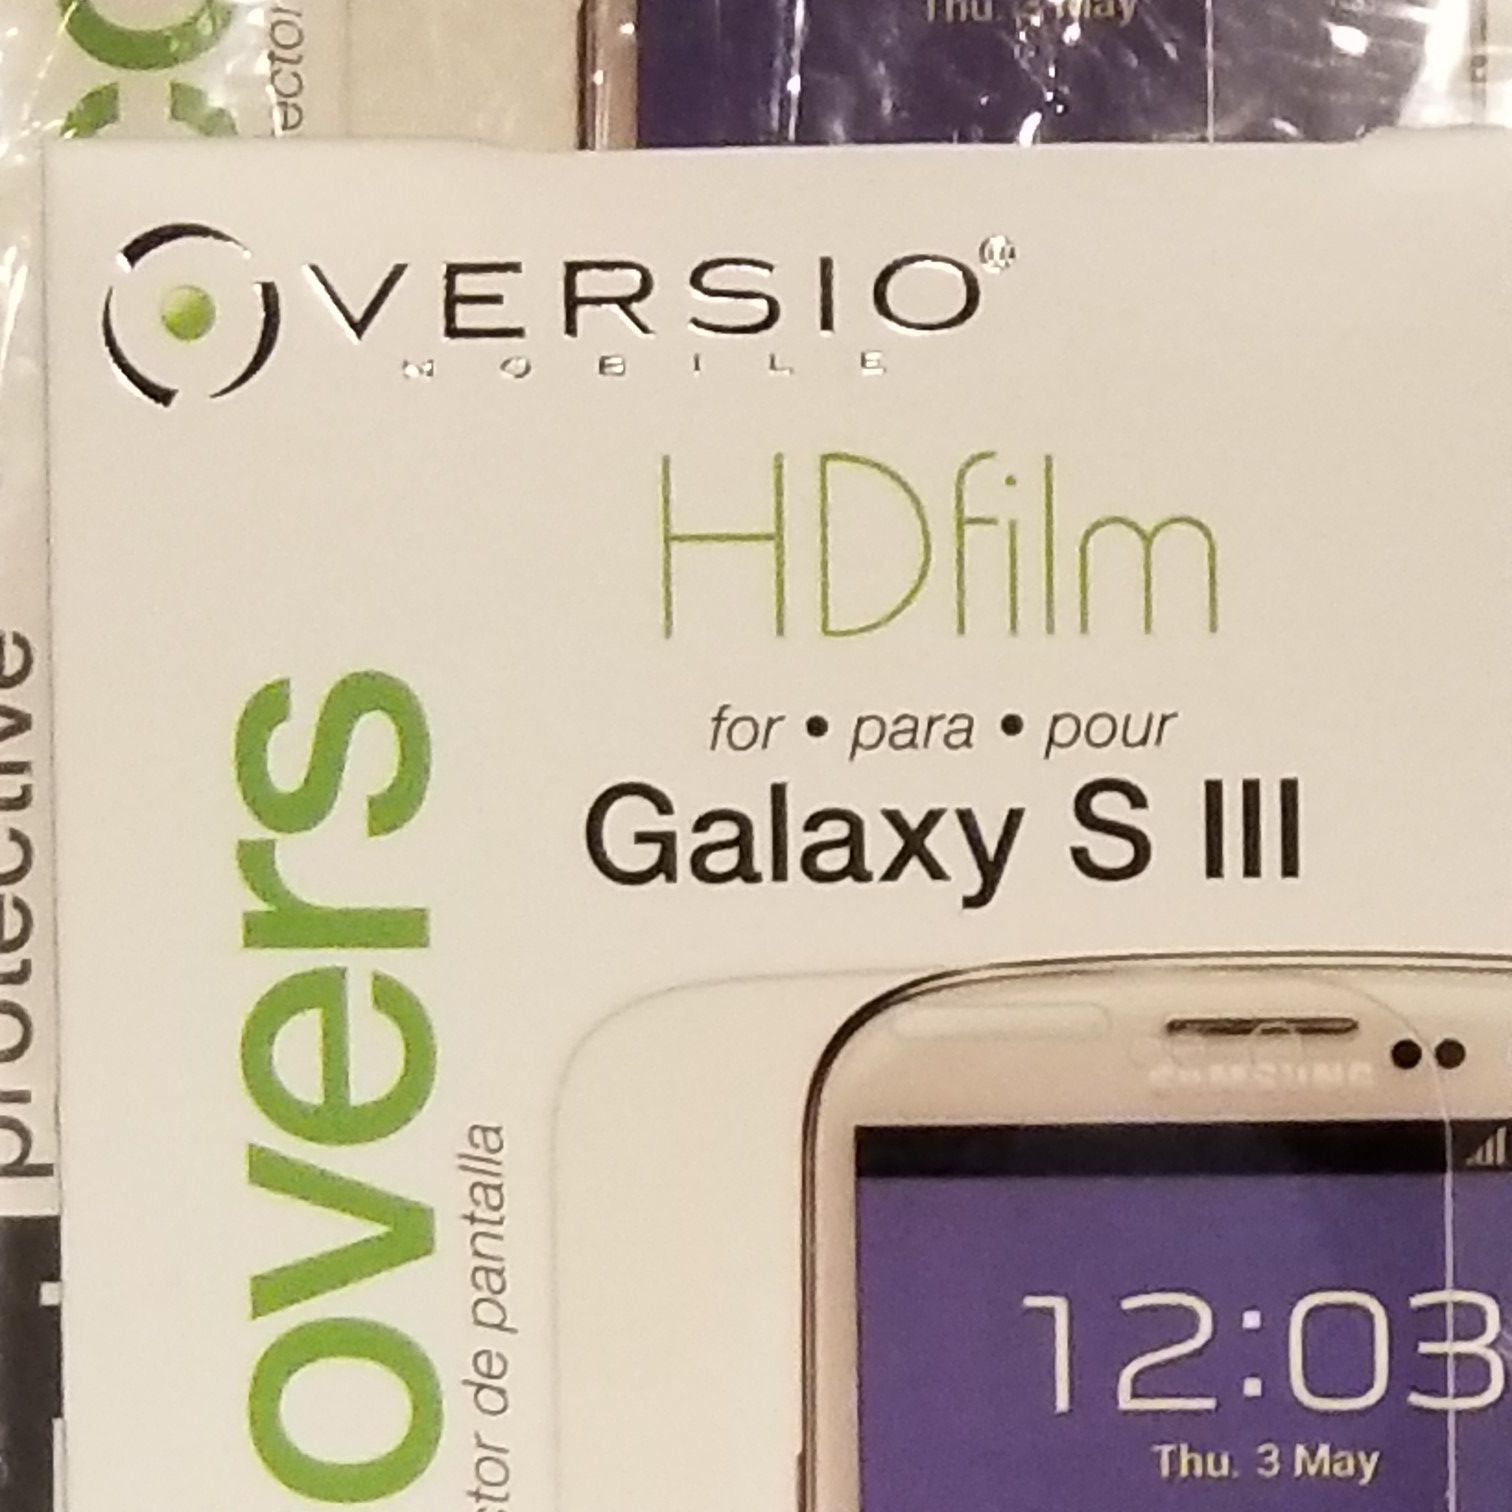 Galaxy S III HD FIlm 3 packs over 500 packs